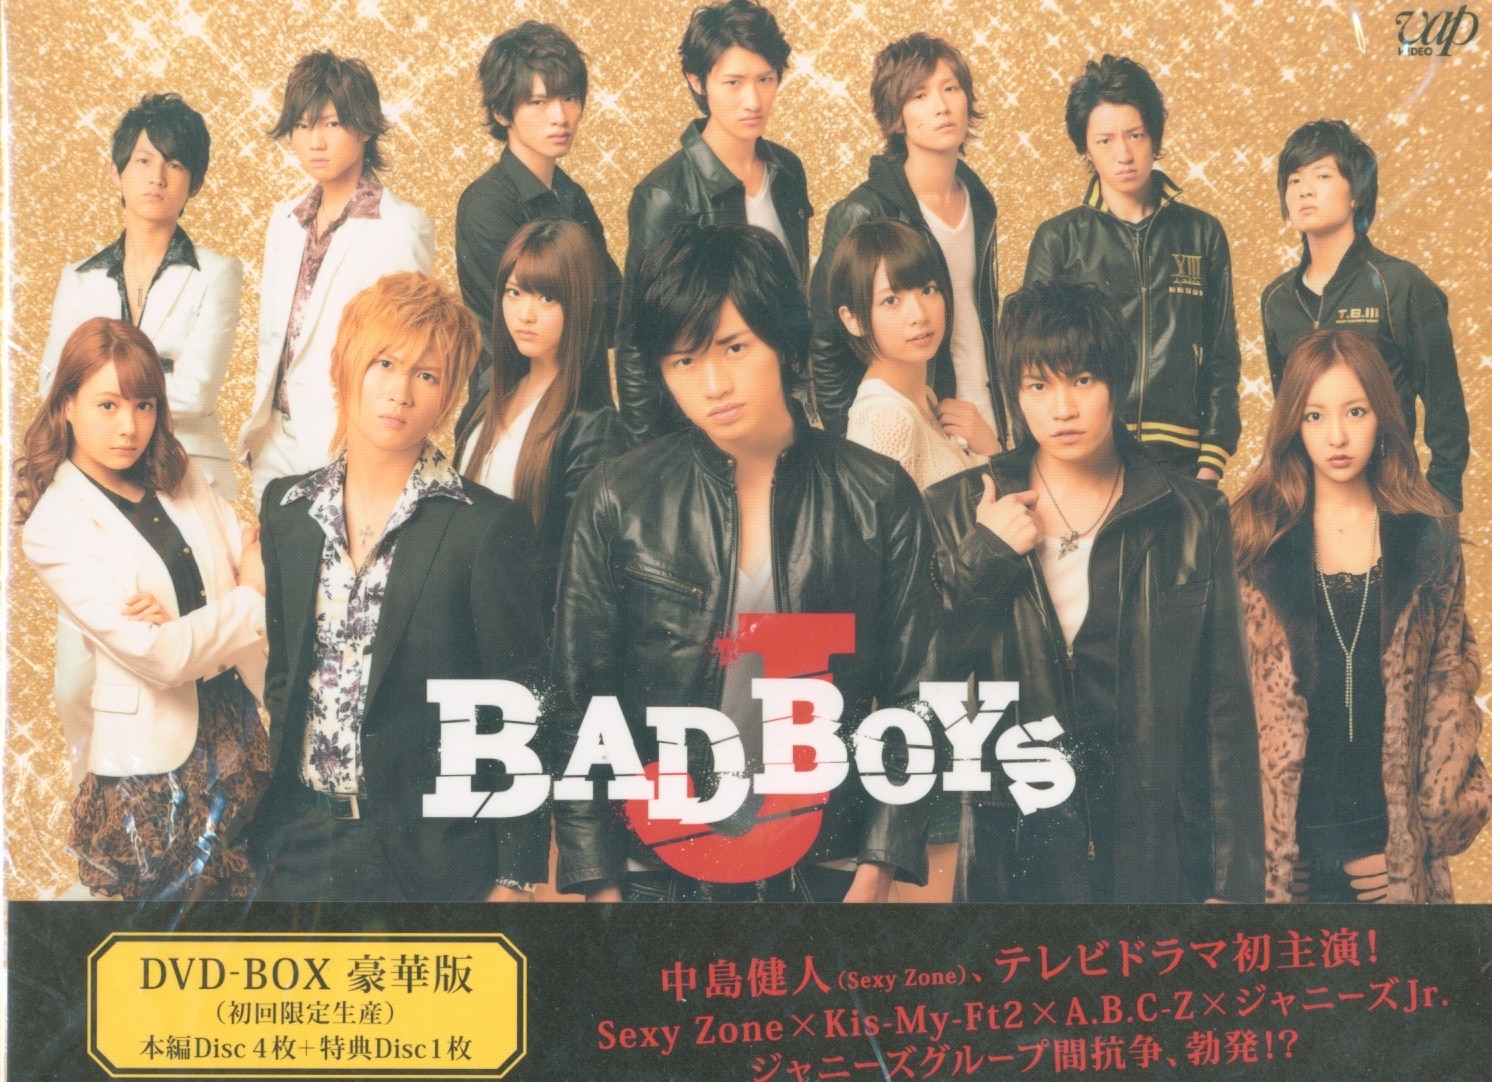 代引き不可 BAD BOYS J DVD-BOX 豪華版 初回限定生産 ドラマ 劇場版